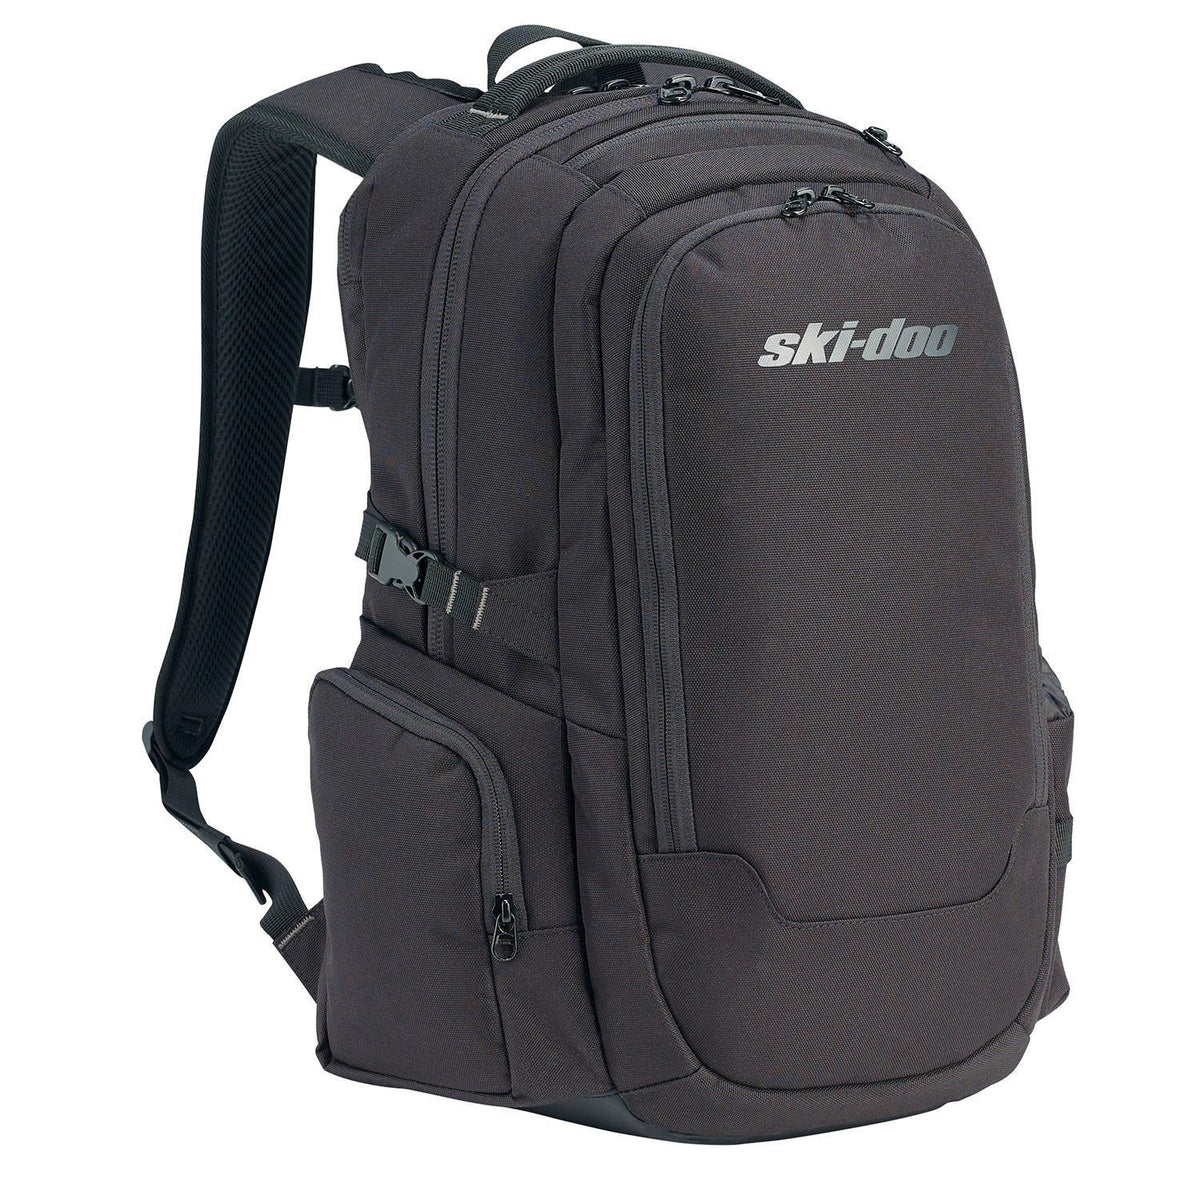 Ski-Doo Laptop Backpack